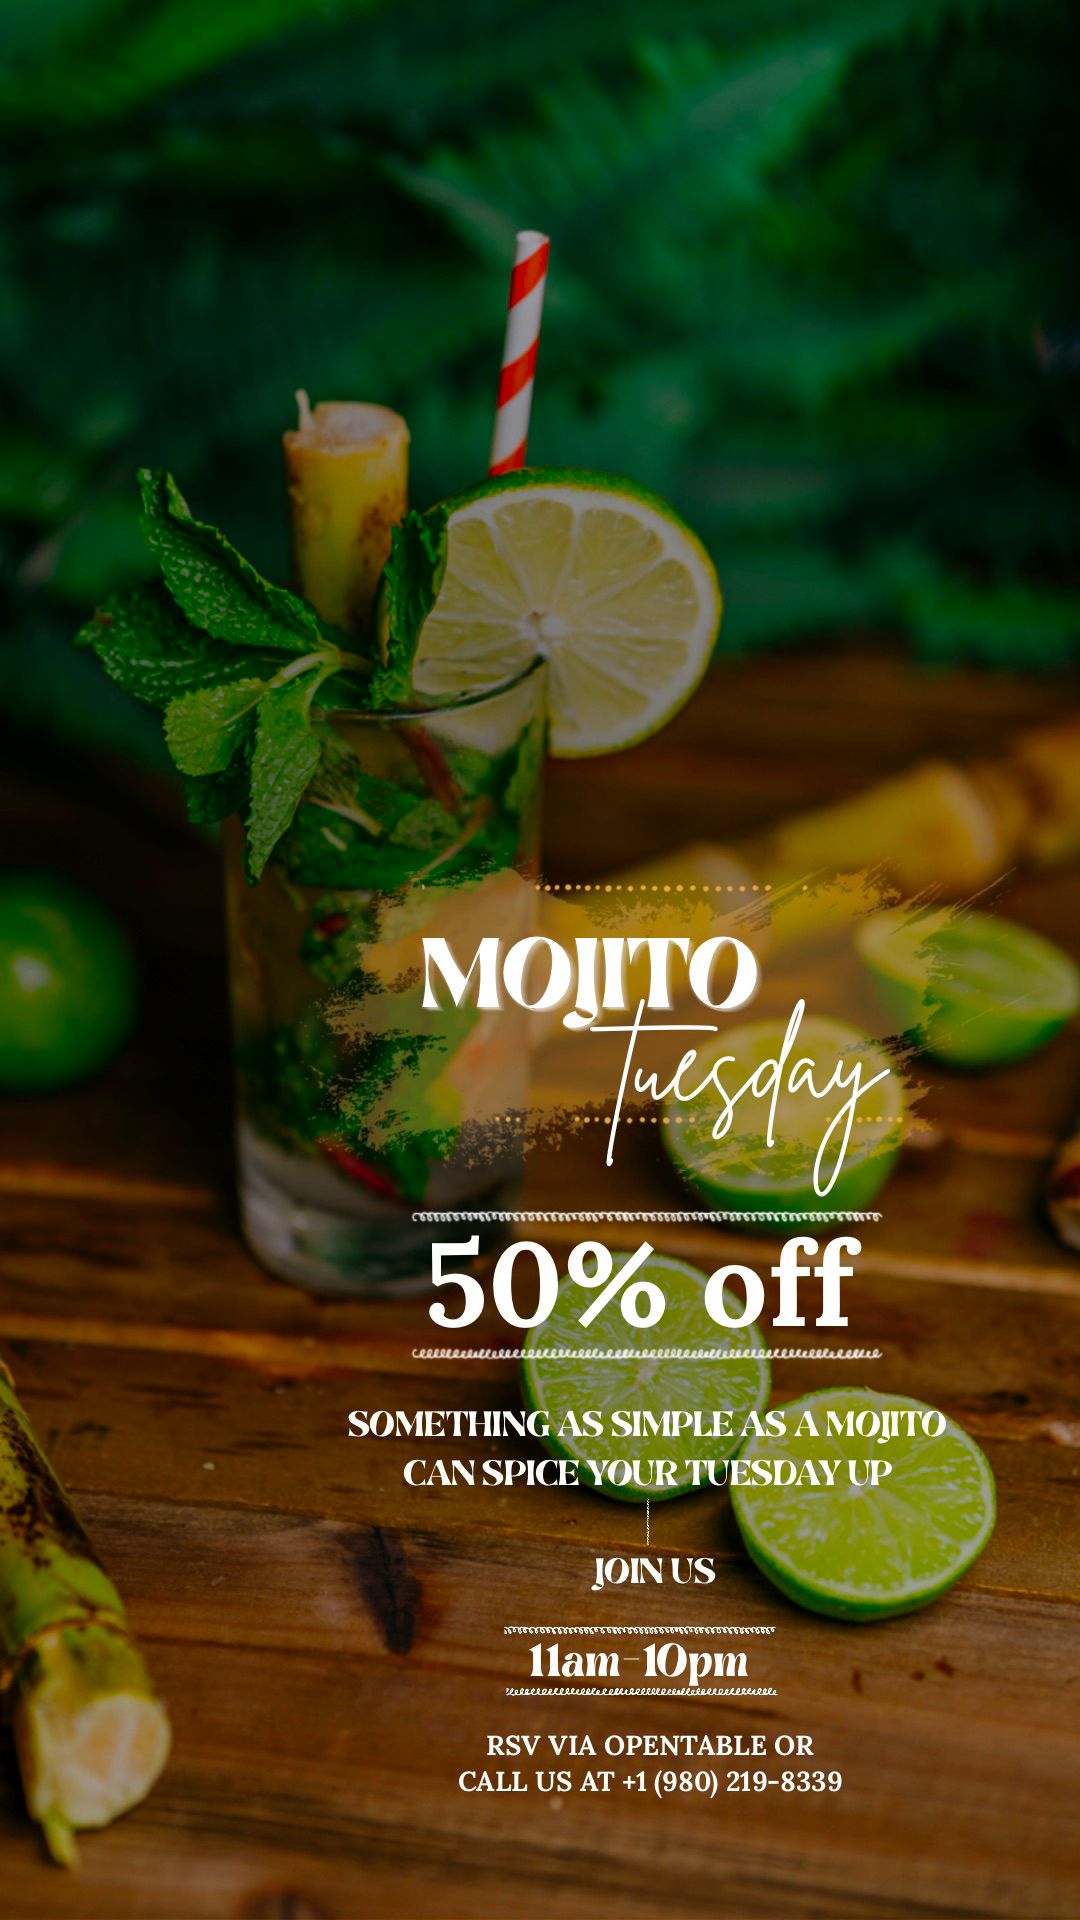 Mojito Tuesday - El Puro Cuban Restaurant